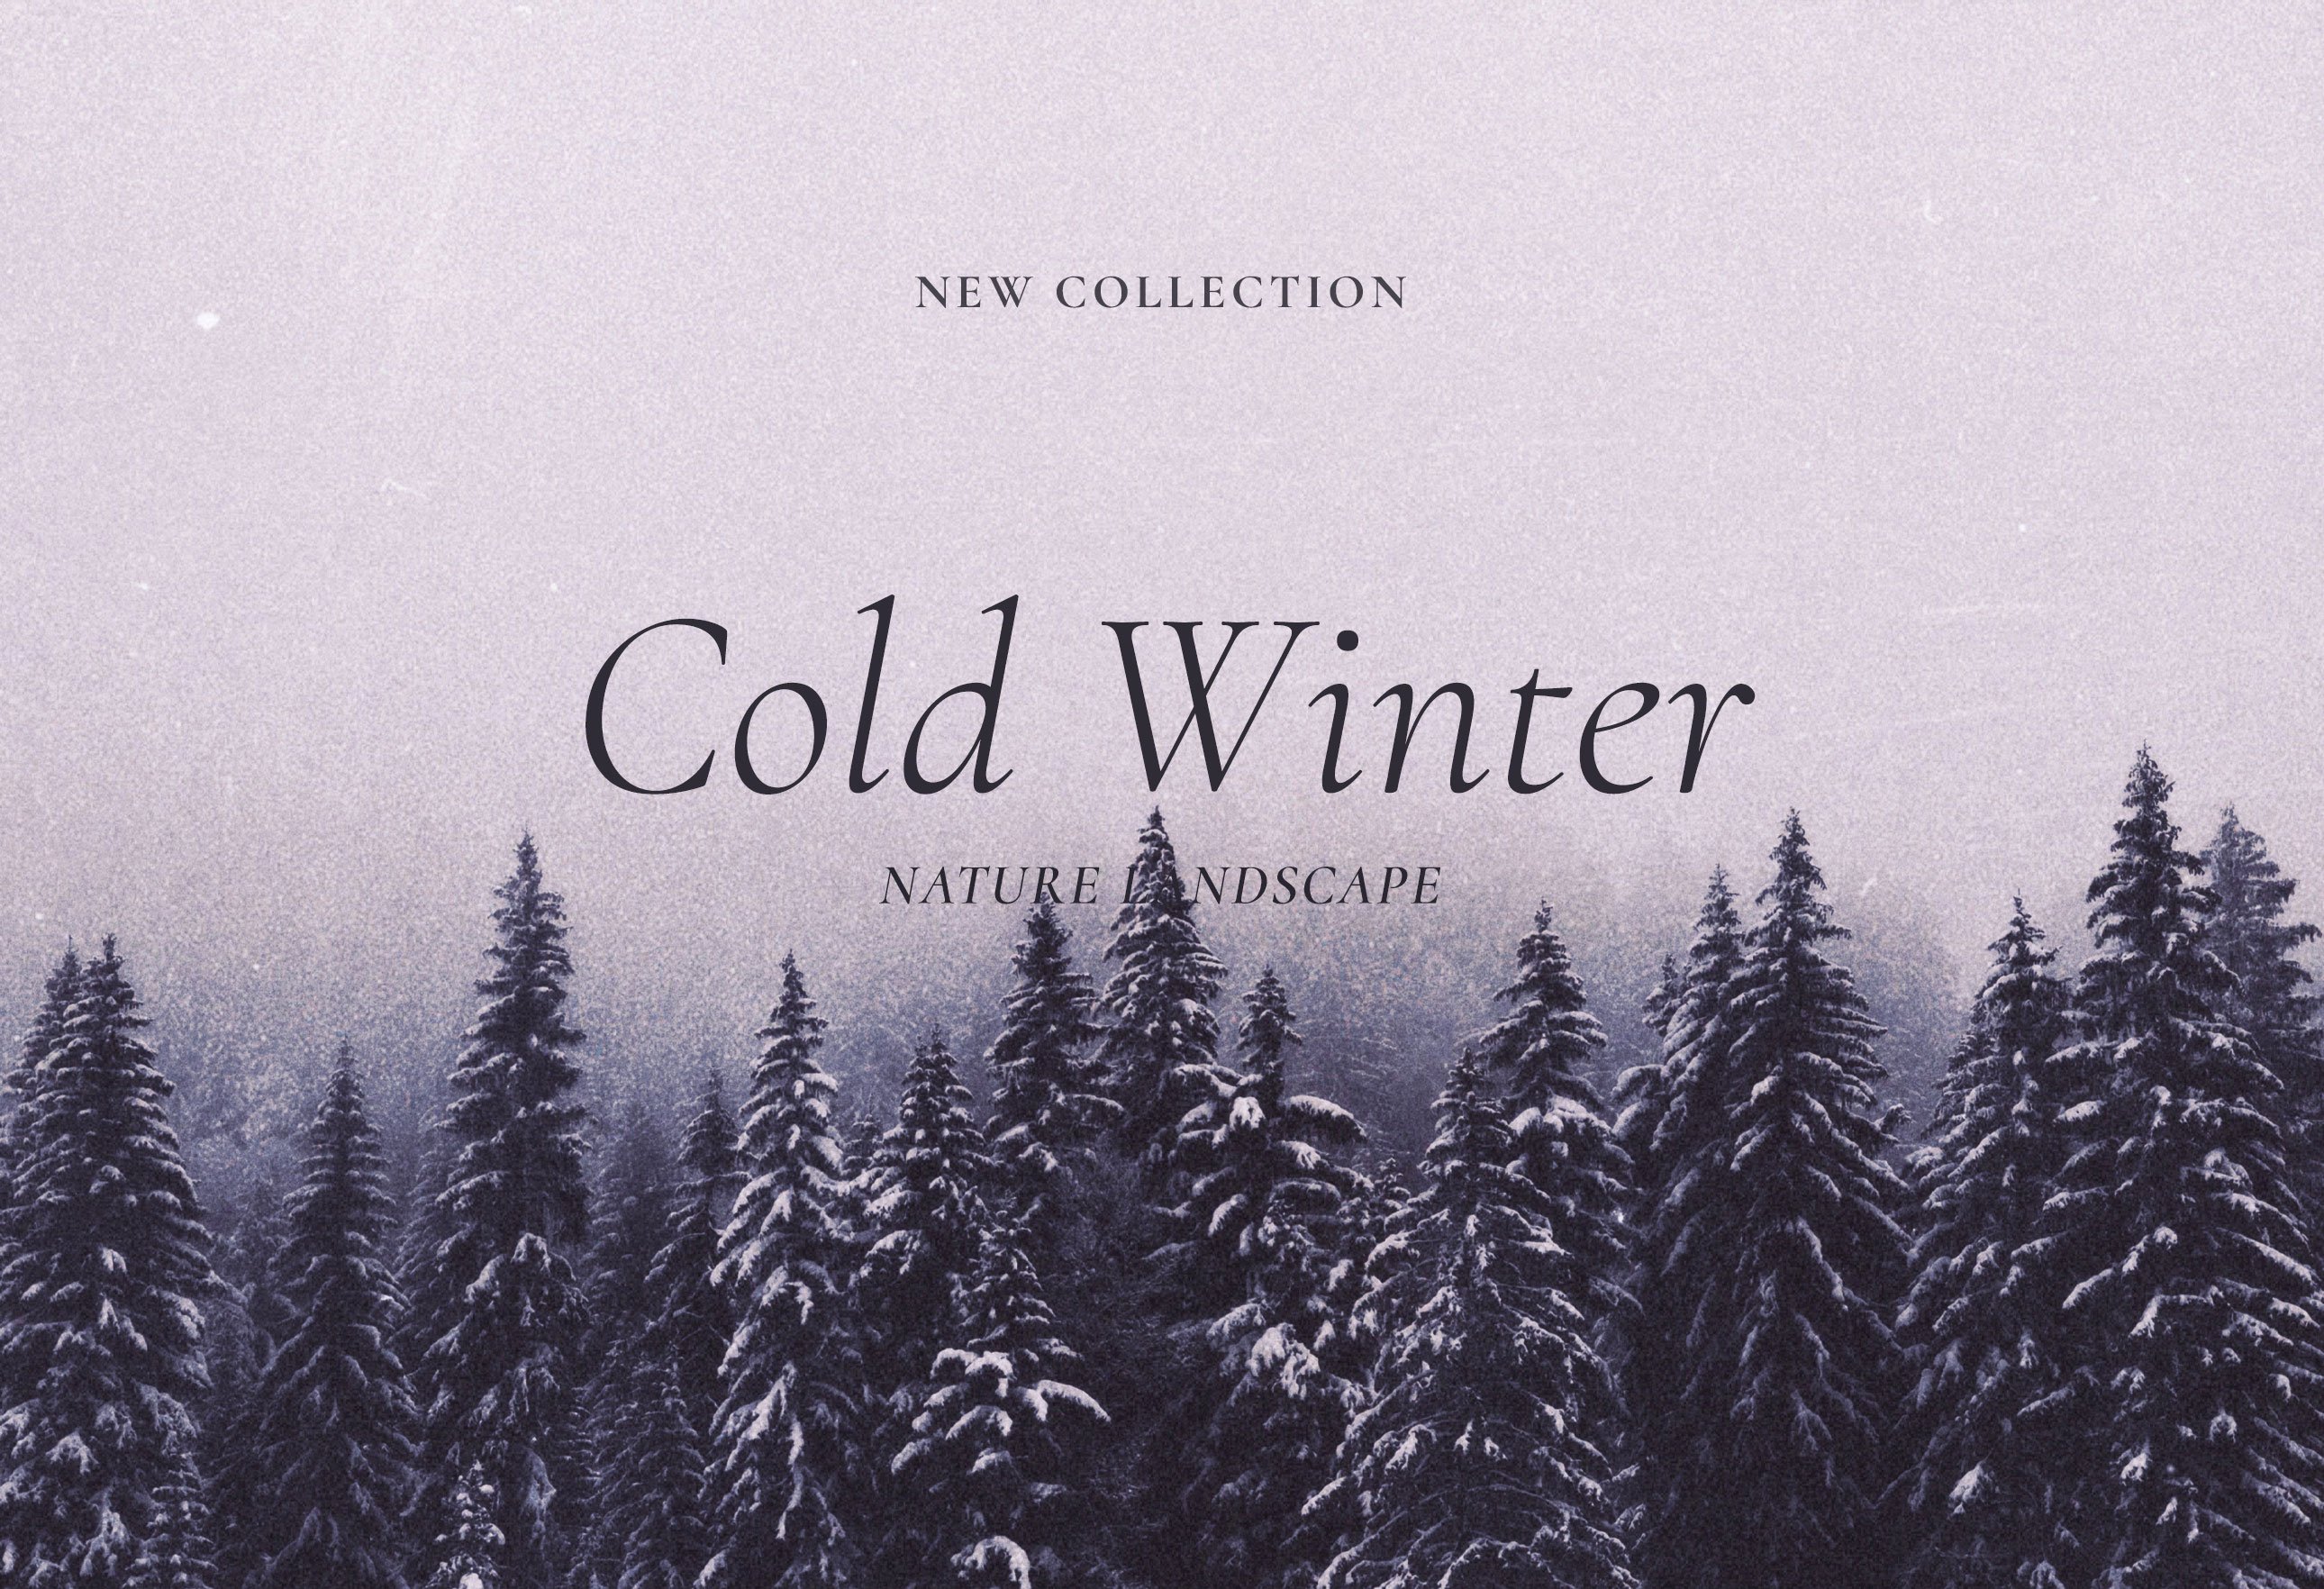 Cold Winter Landscape cover image.